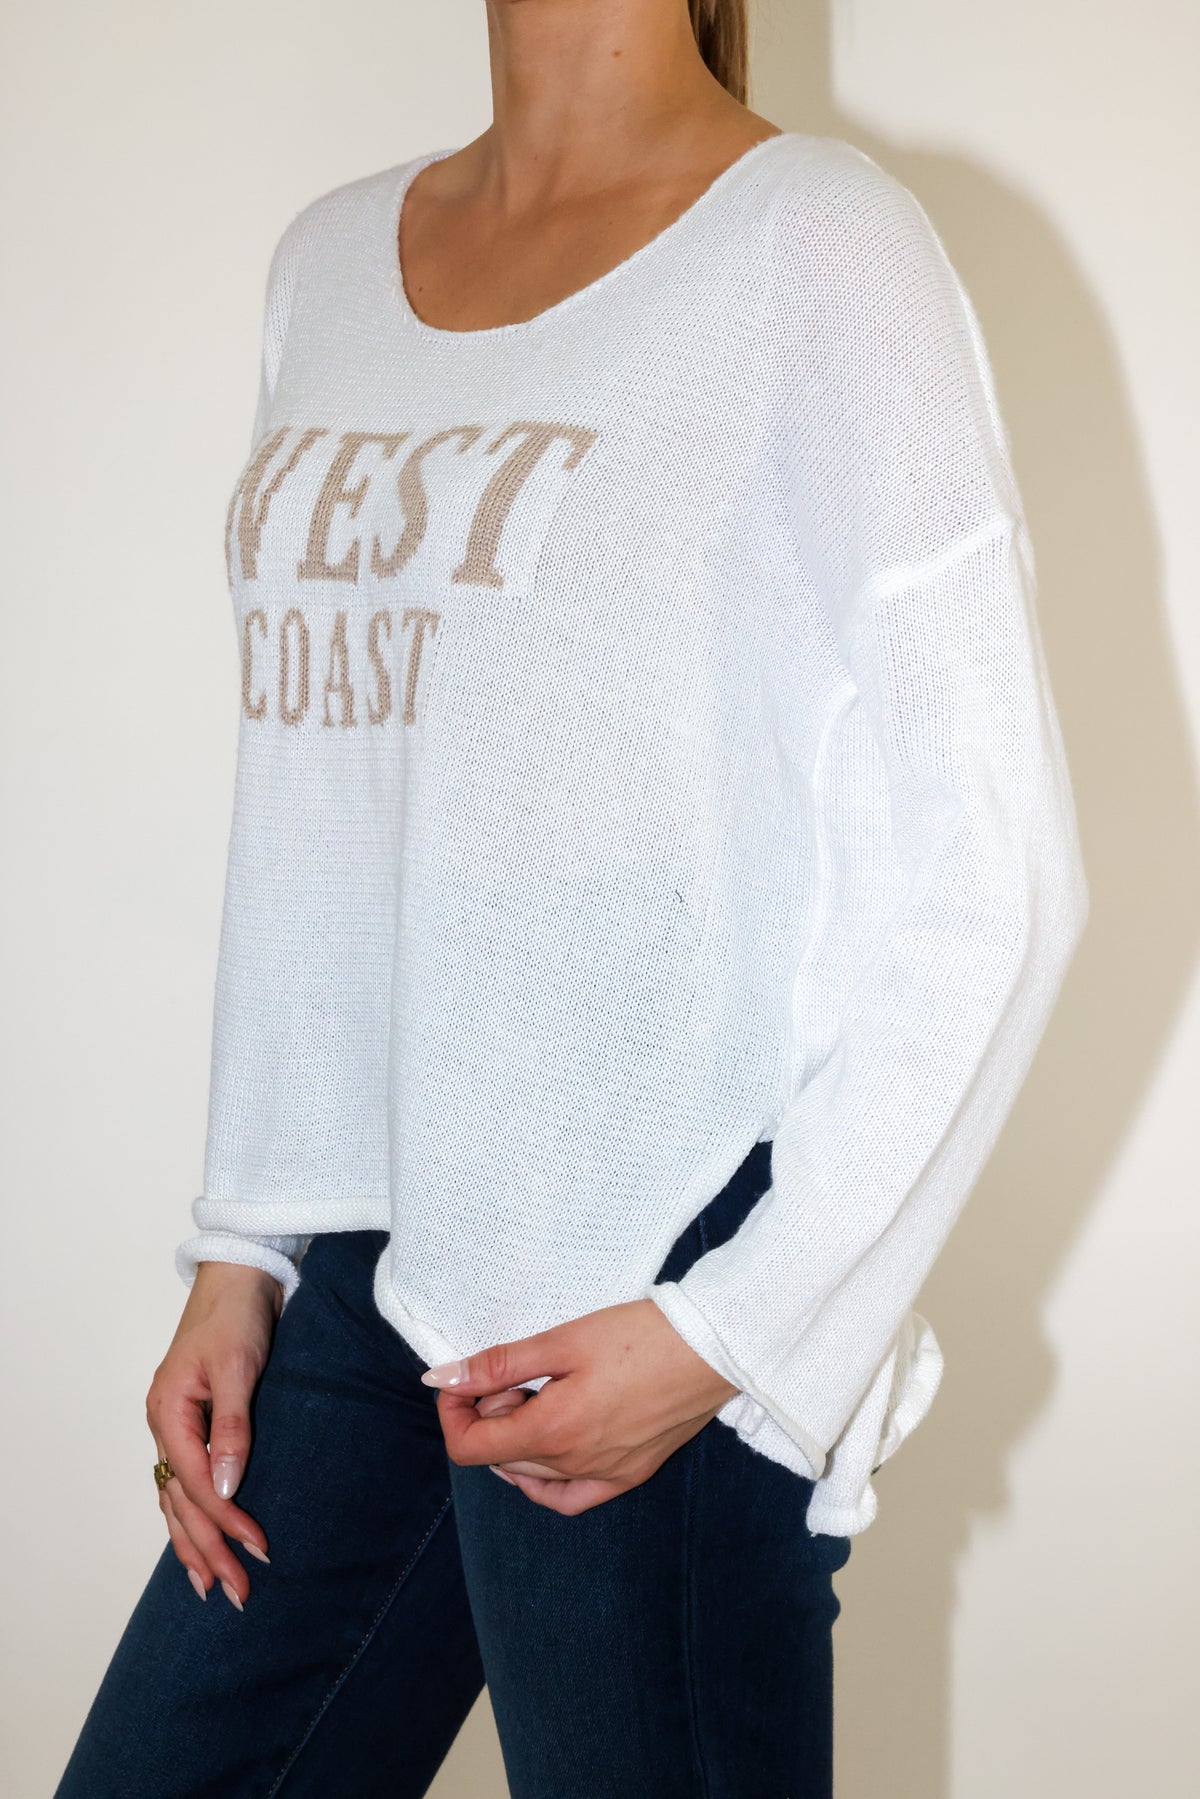 West Coast Sweater